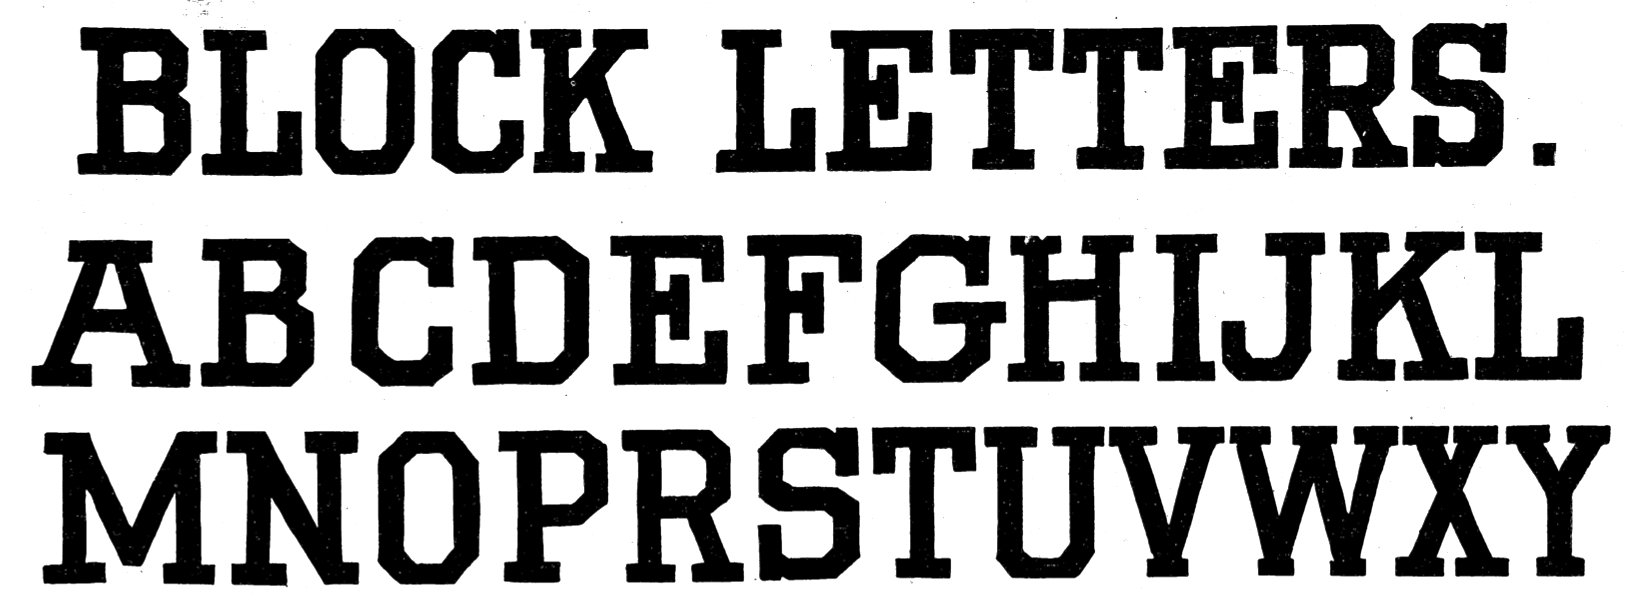 block lettering font rossfgeorge speedballbook blockletters 1927